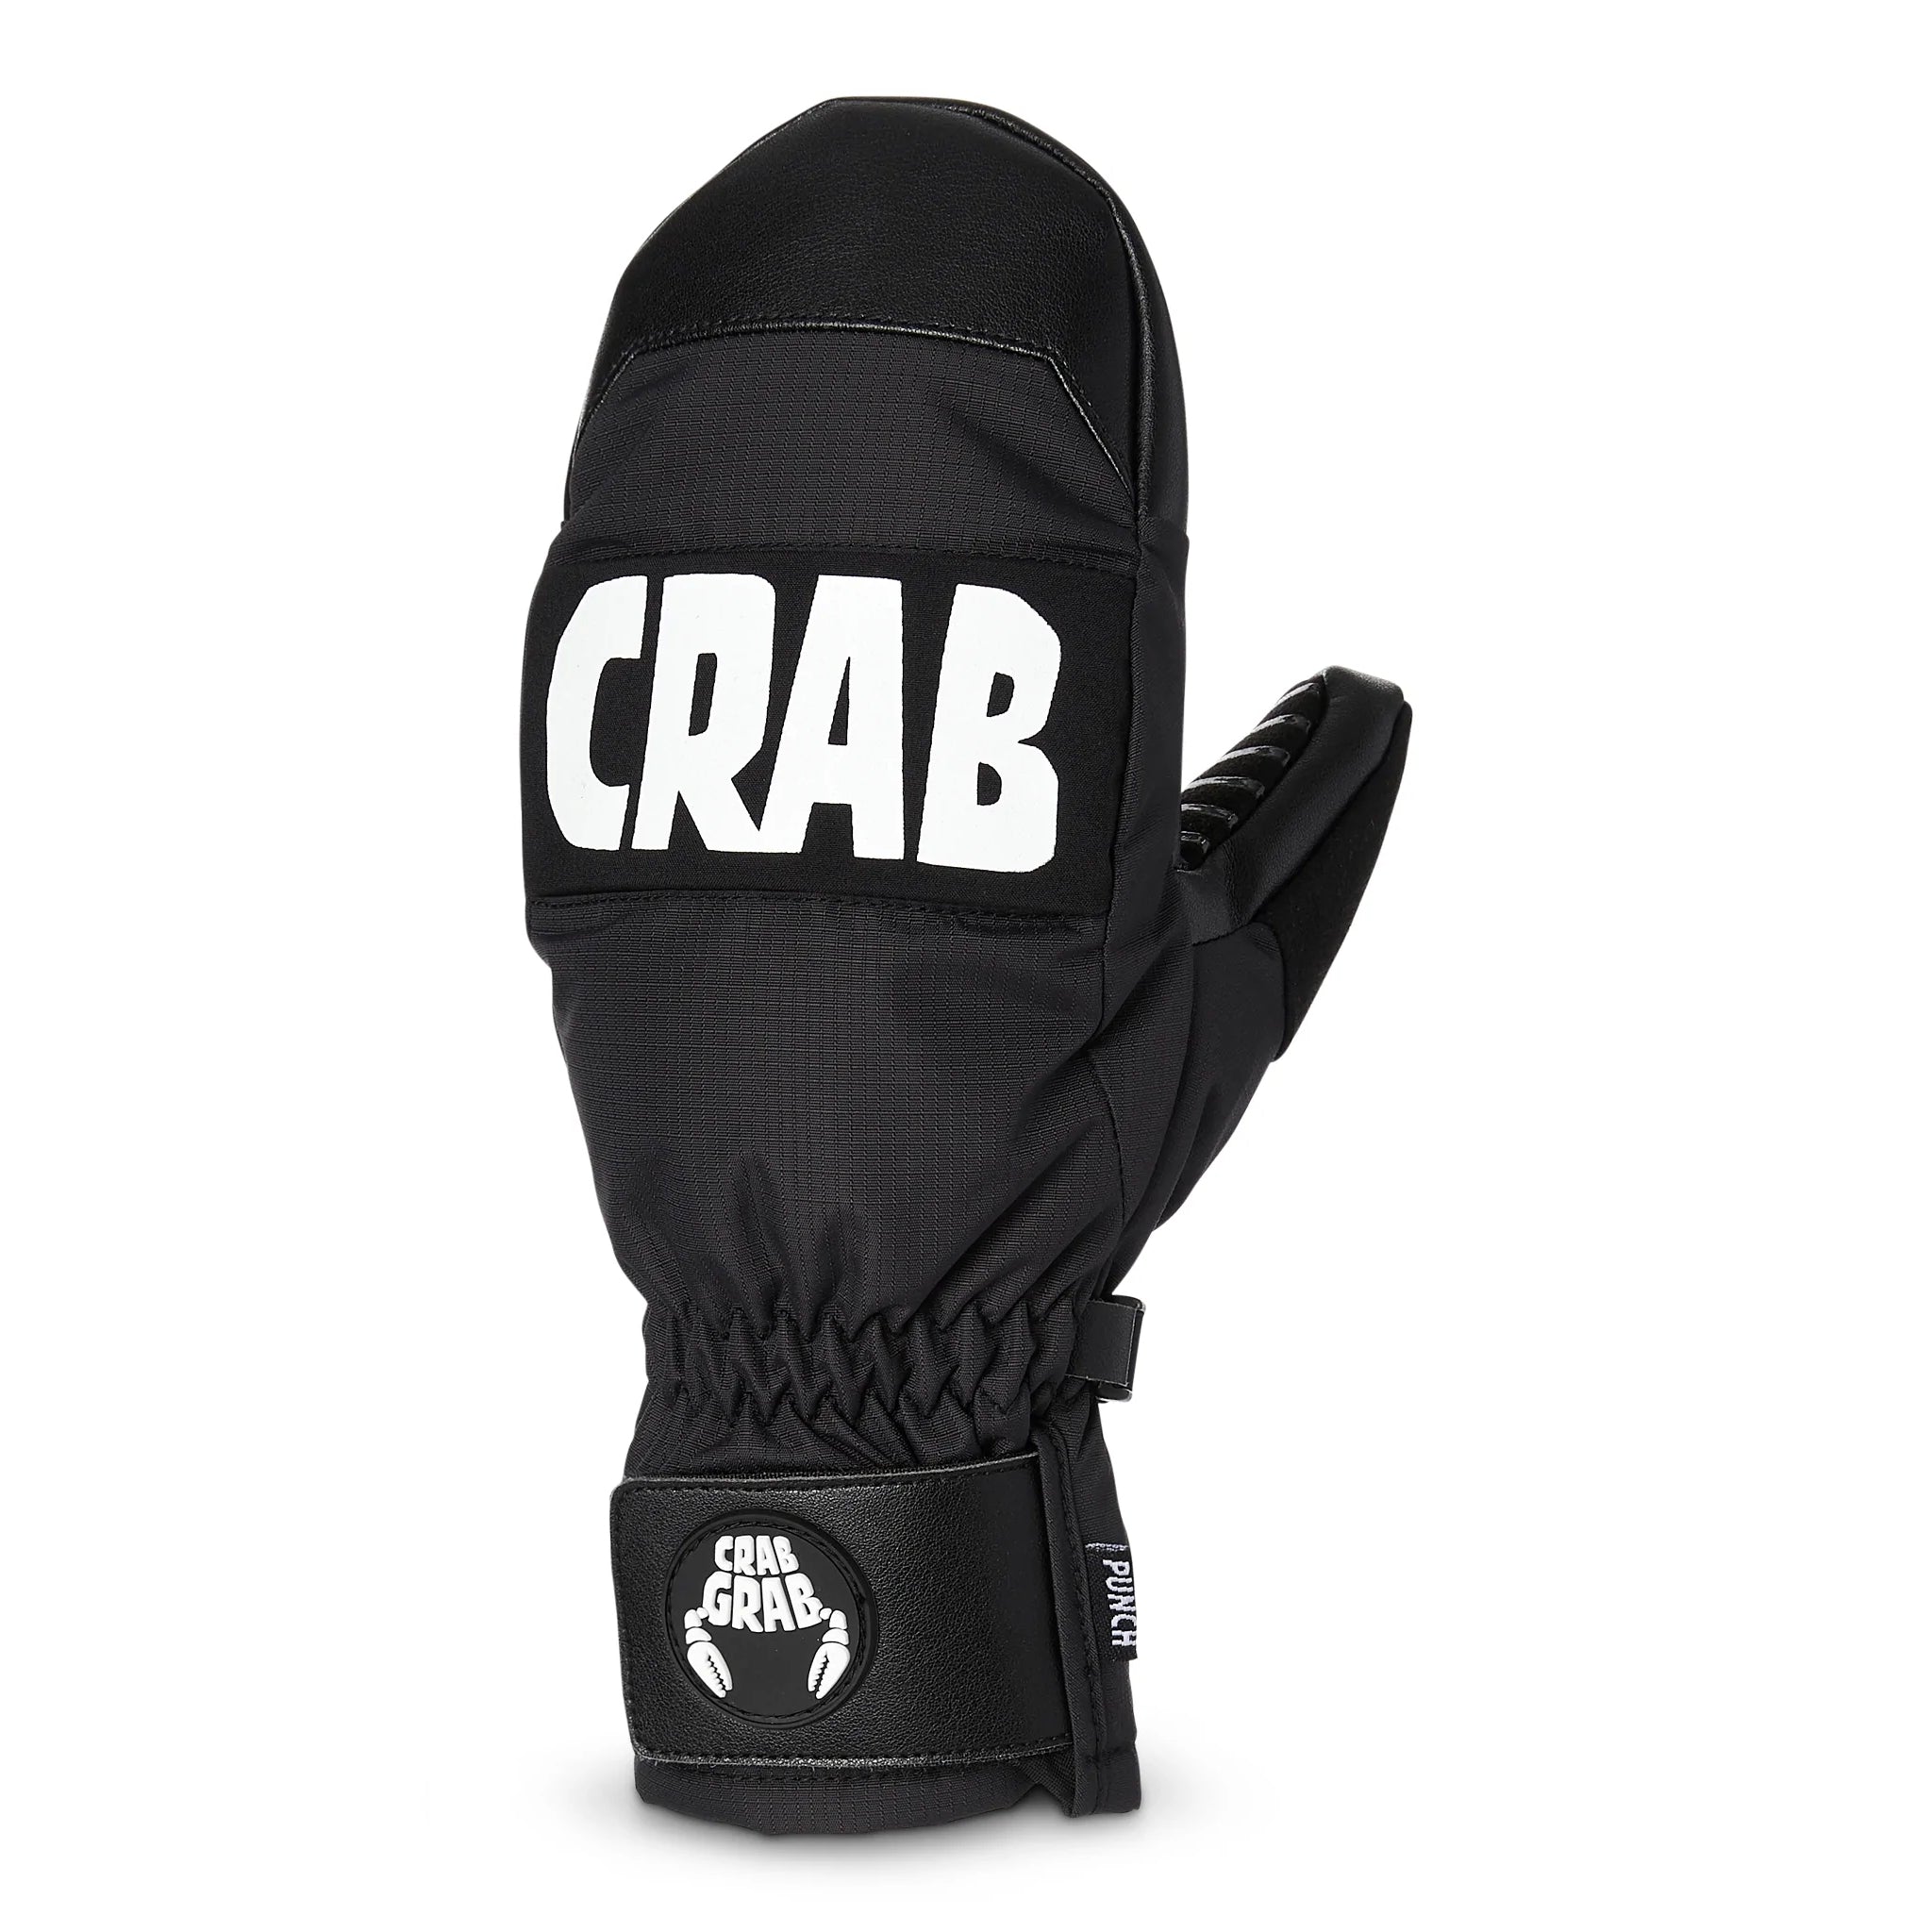 Crab Grab Youth Punch Mitt Snowboard Mittens - Black